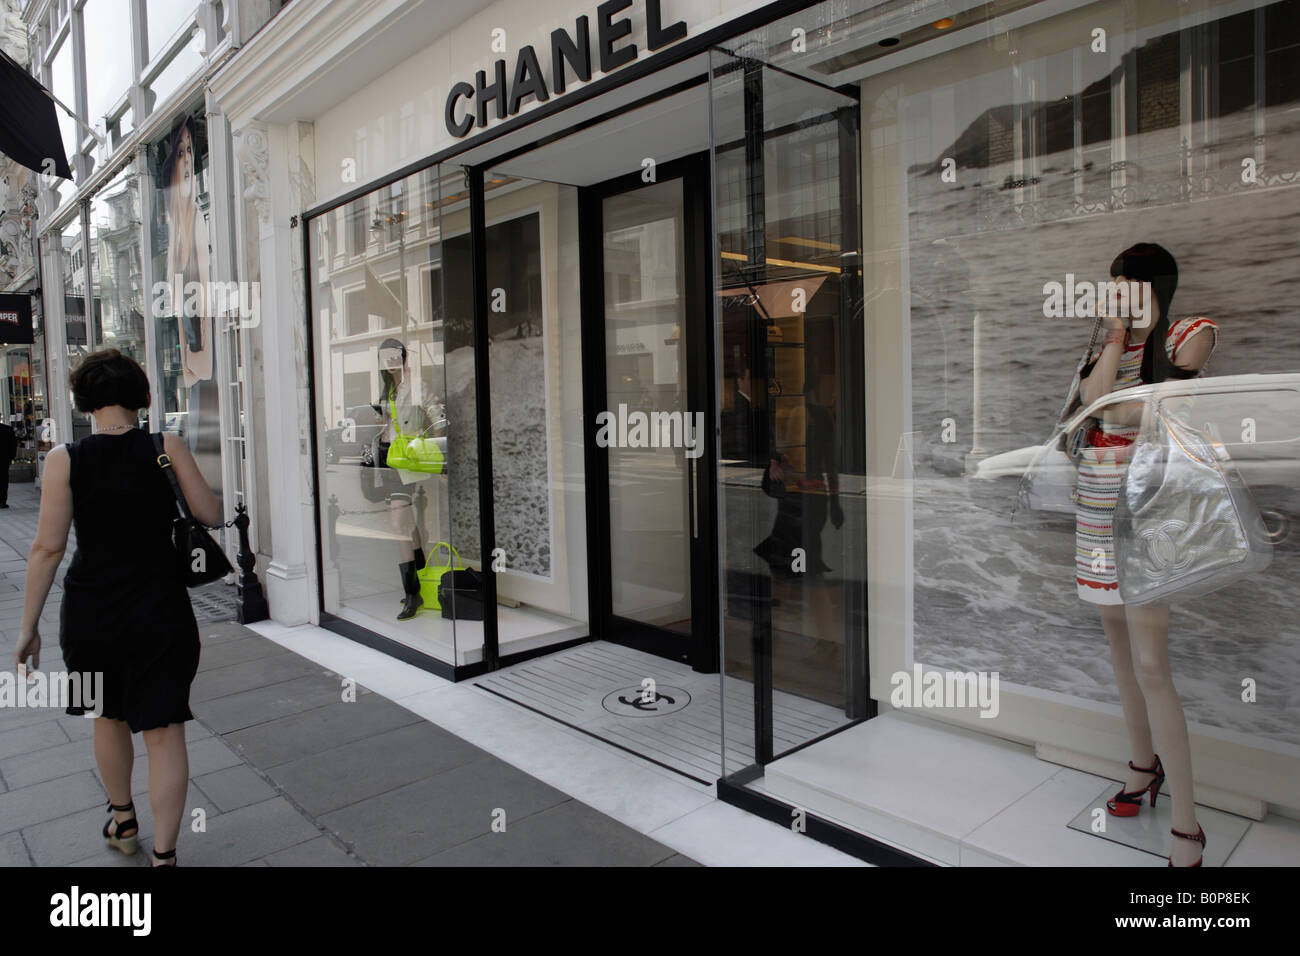 Chanel store on Bond street, London Stock Photo - Alamy